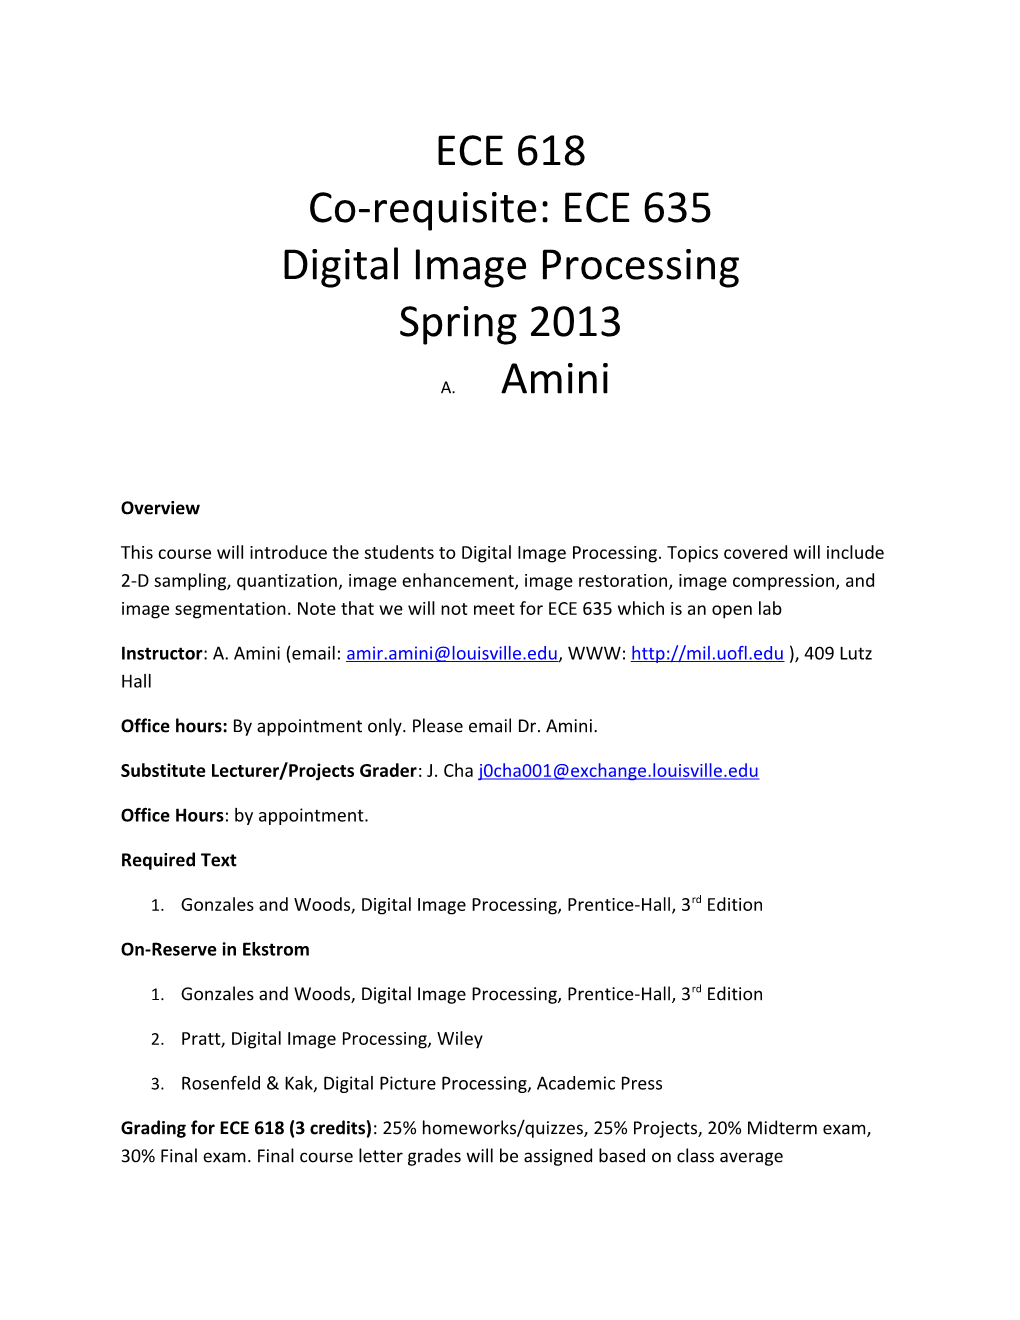 Co-Requisite: ECE 635